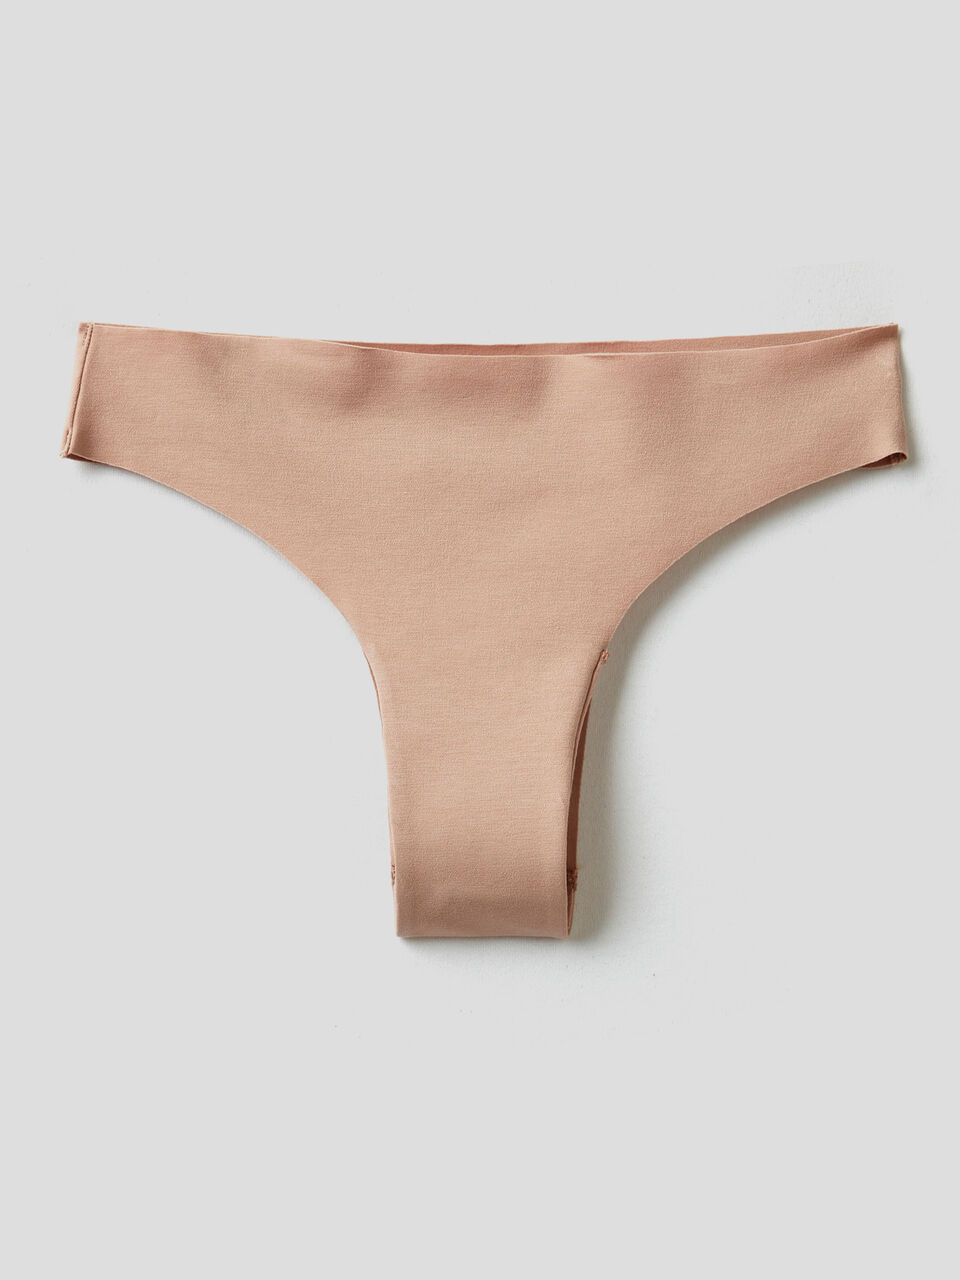 Seamless Brazilian underwear - Nude